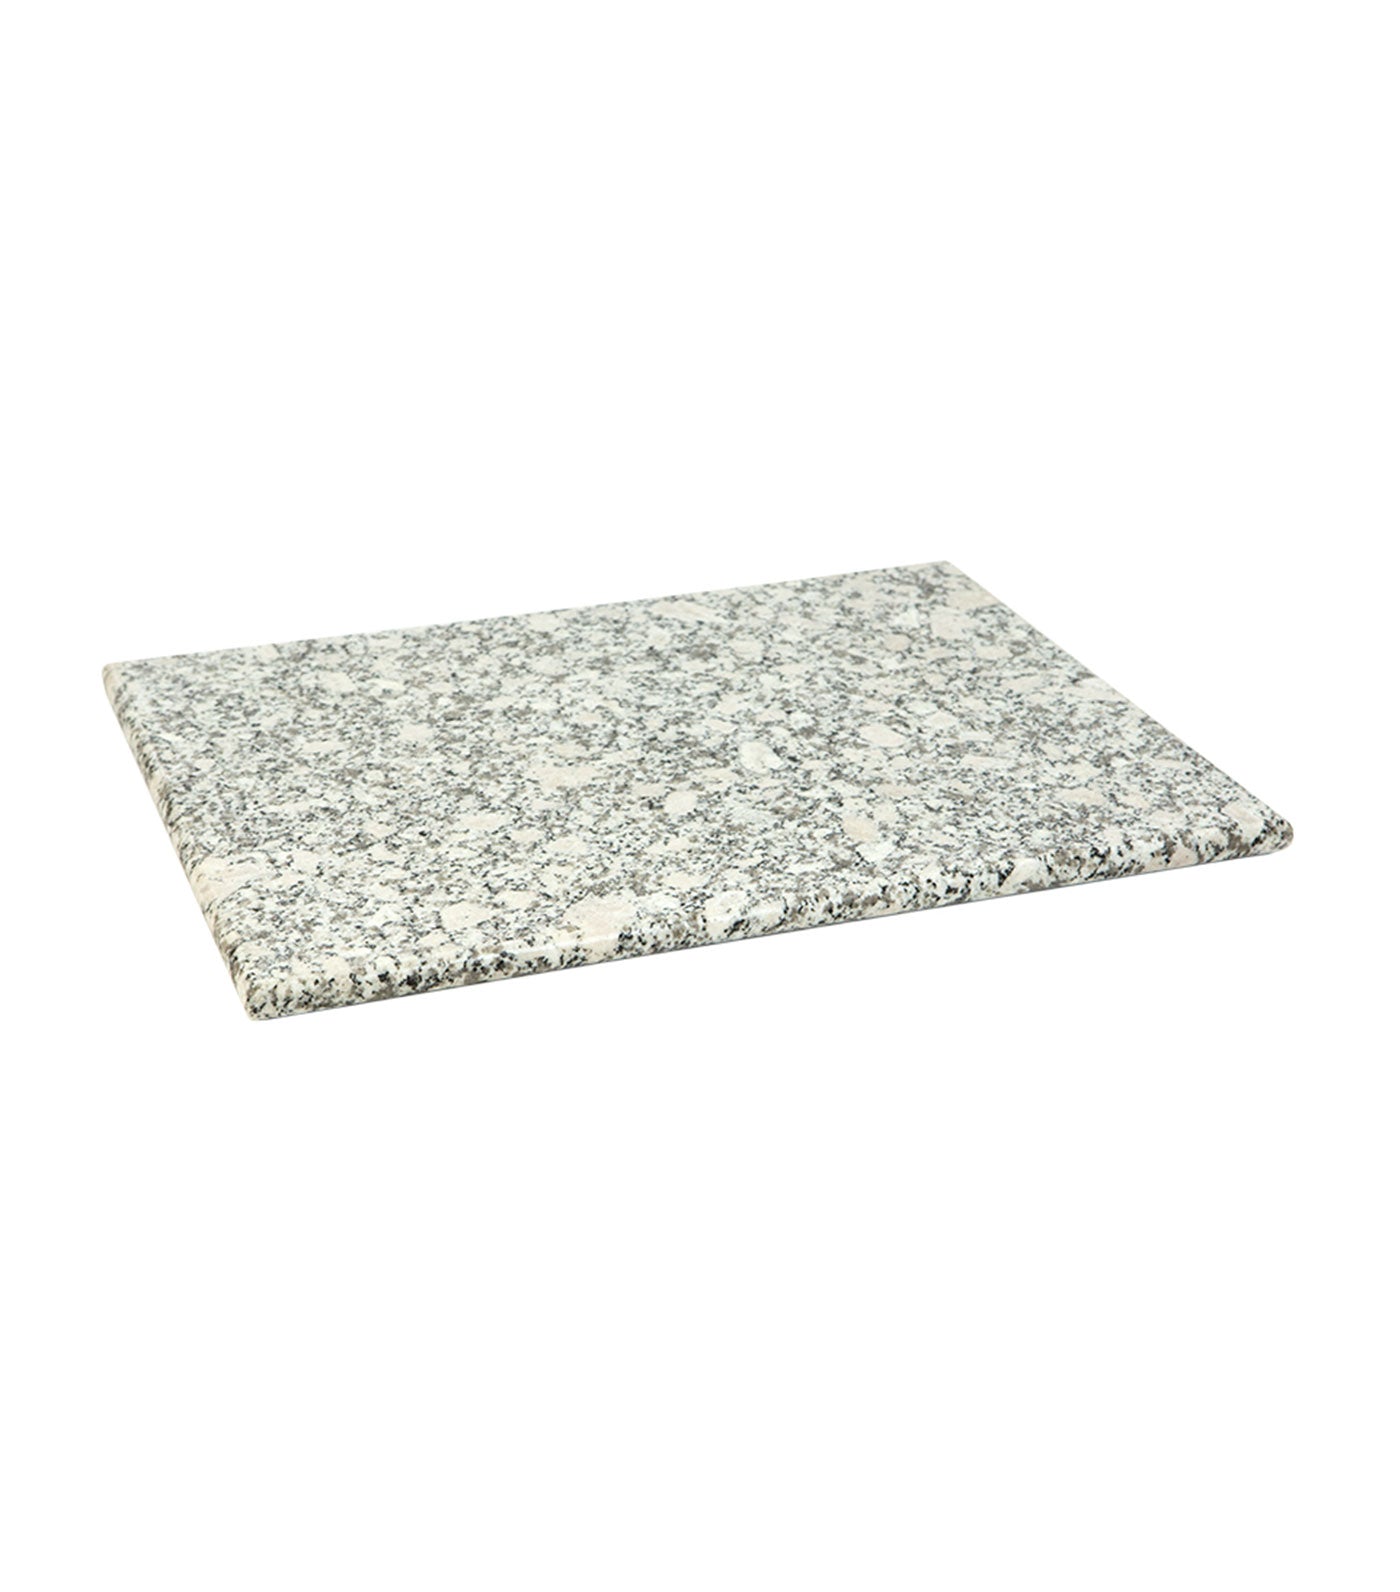 MakeRoom Granite Cutting Board